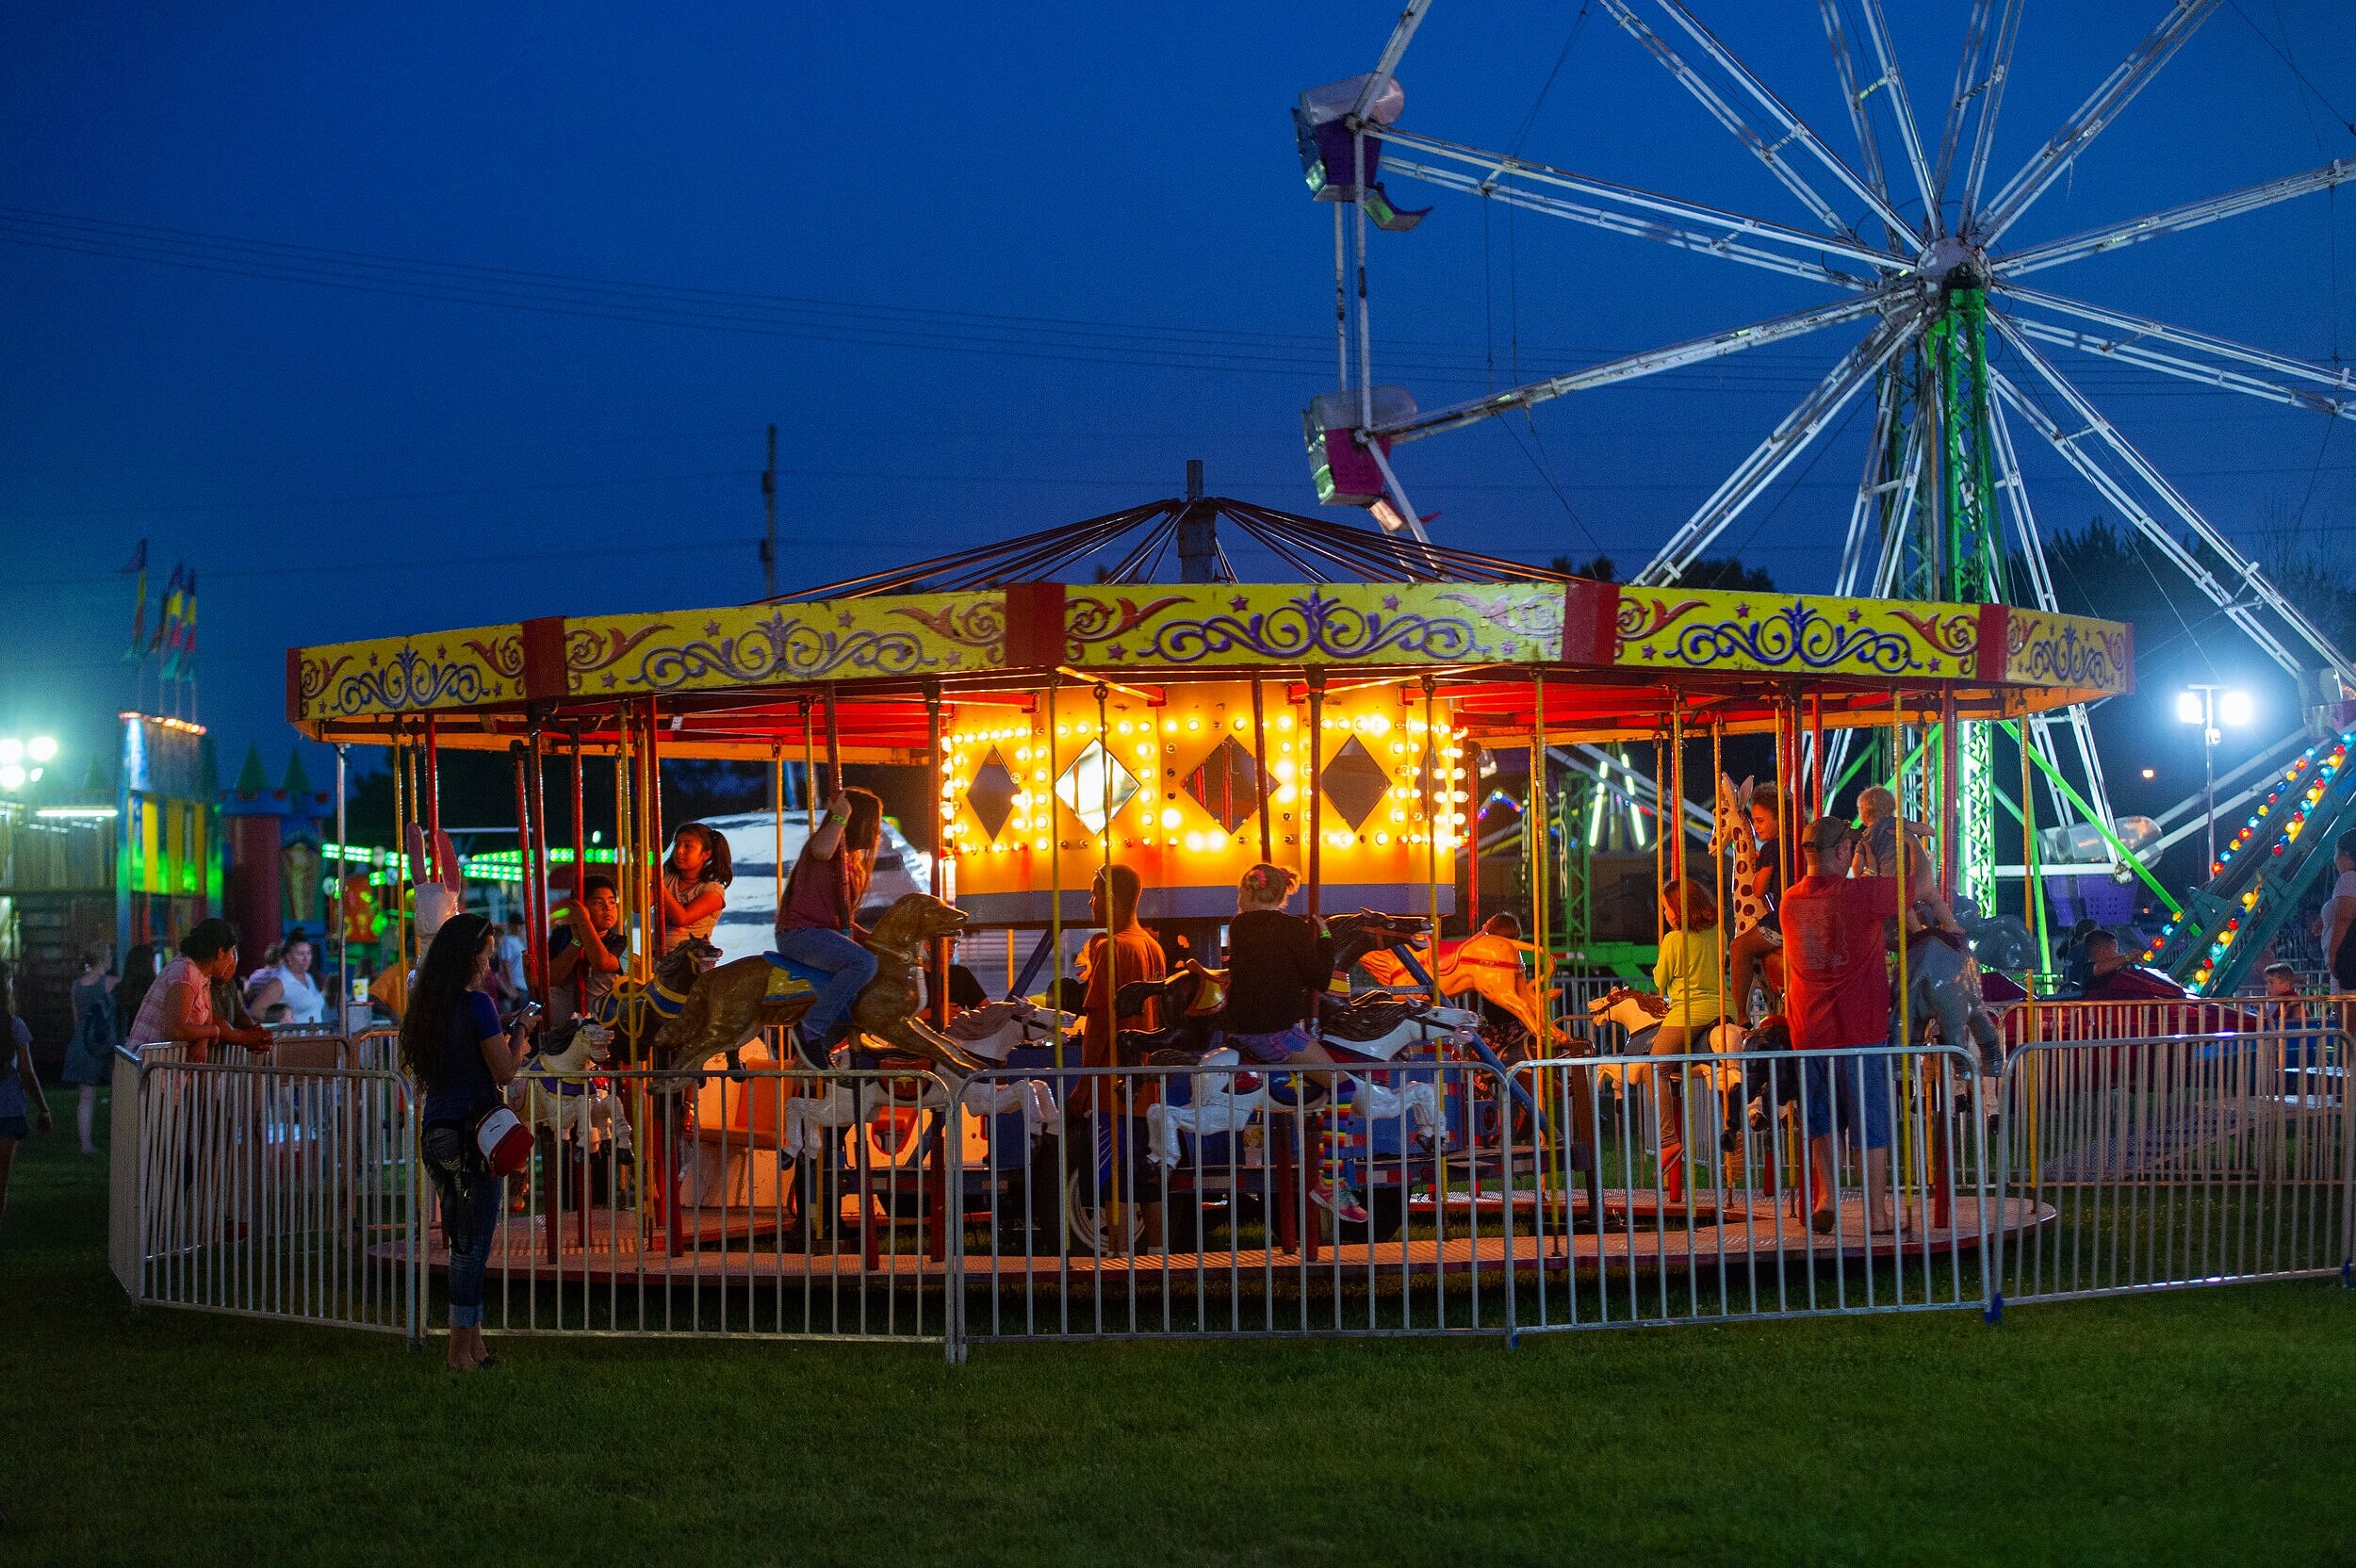 Columbia County Fair